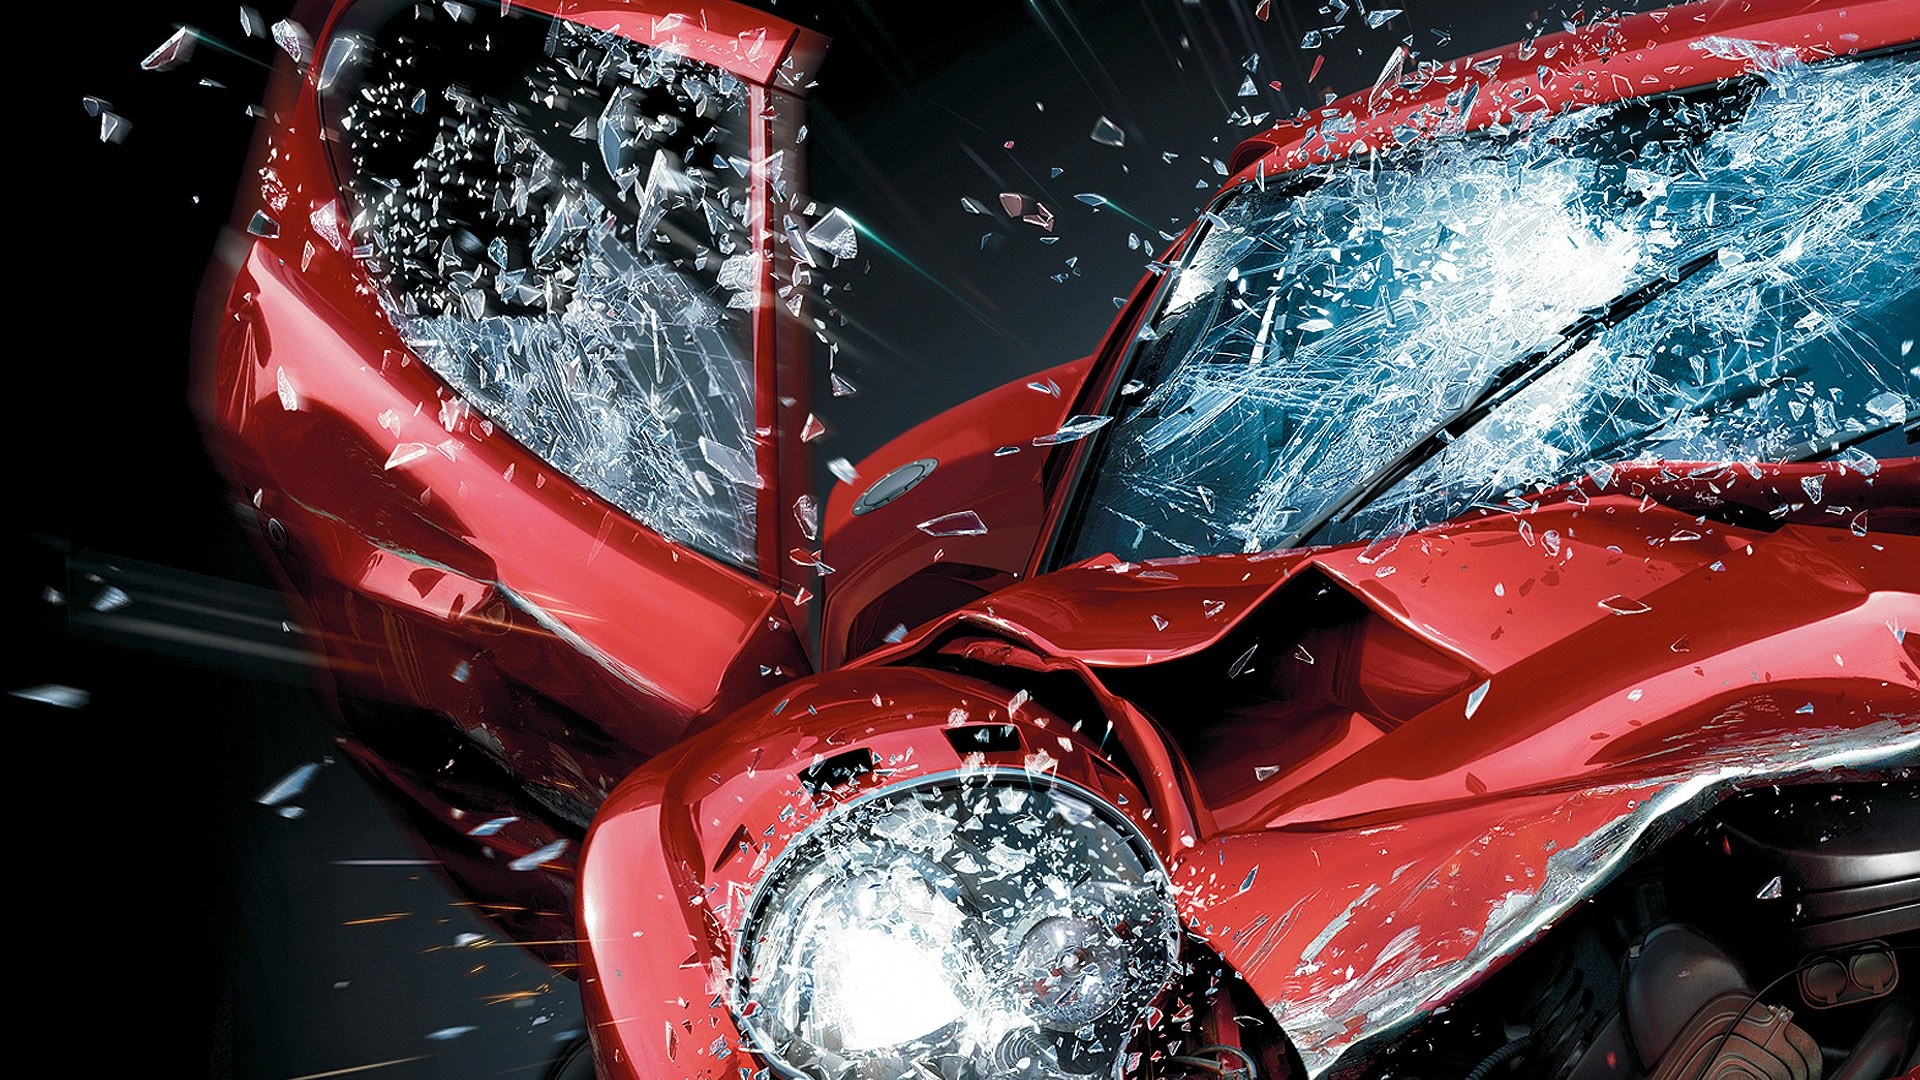 General 1920x1080 video games Burnout Paradise Criterion Games EA Games vehicle crash video game art red cars broken glass